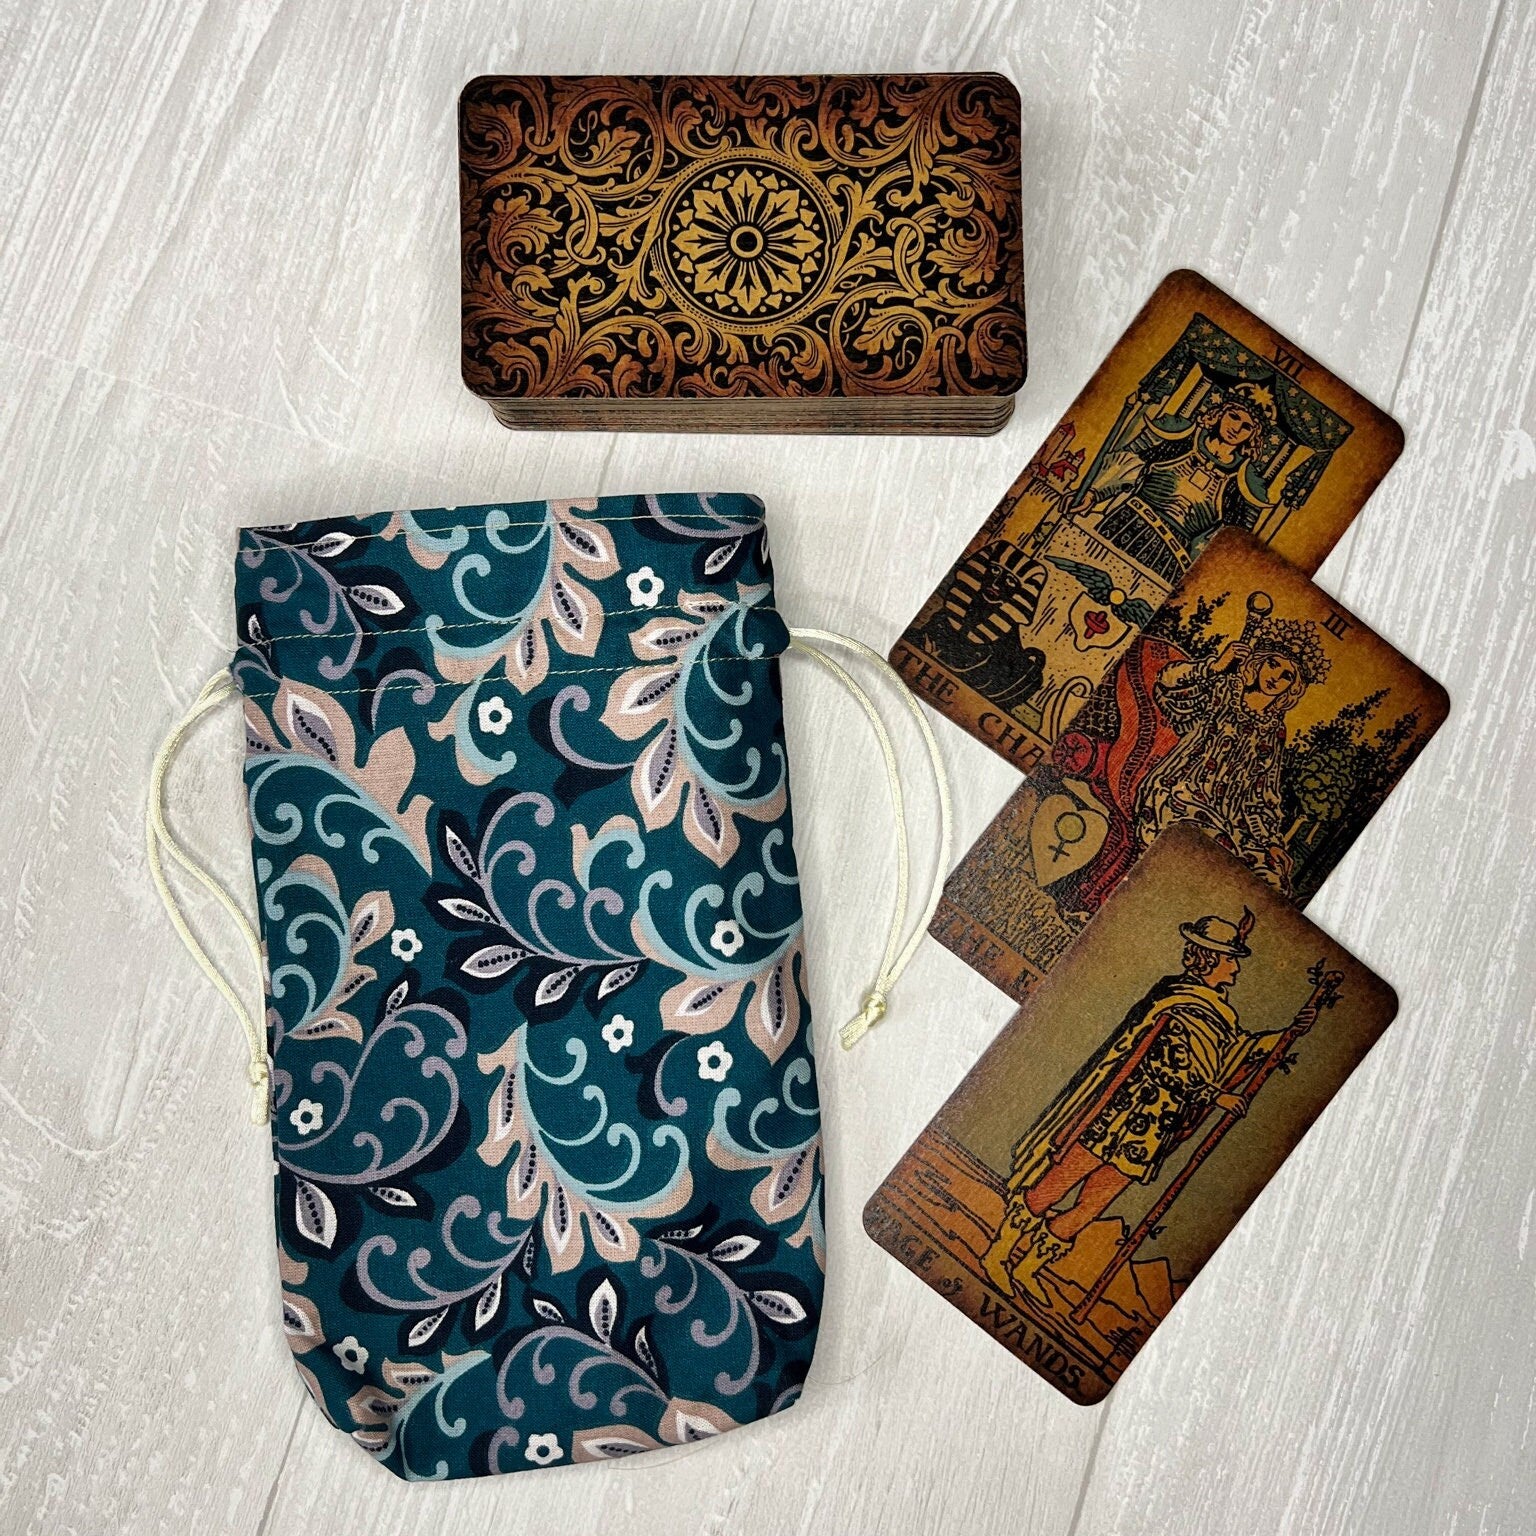 Floral Tarot Bag, Drawstring Pouch, Tarot Deck Storage Holder, Standard Tarot Case, Pagan Witchcraft Divination Tools Gifts & Supplies